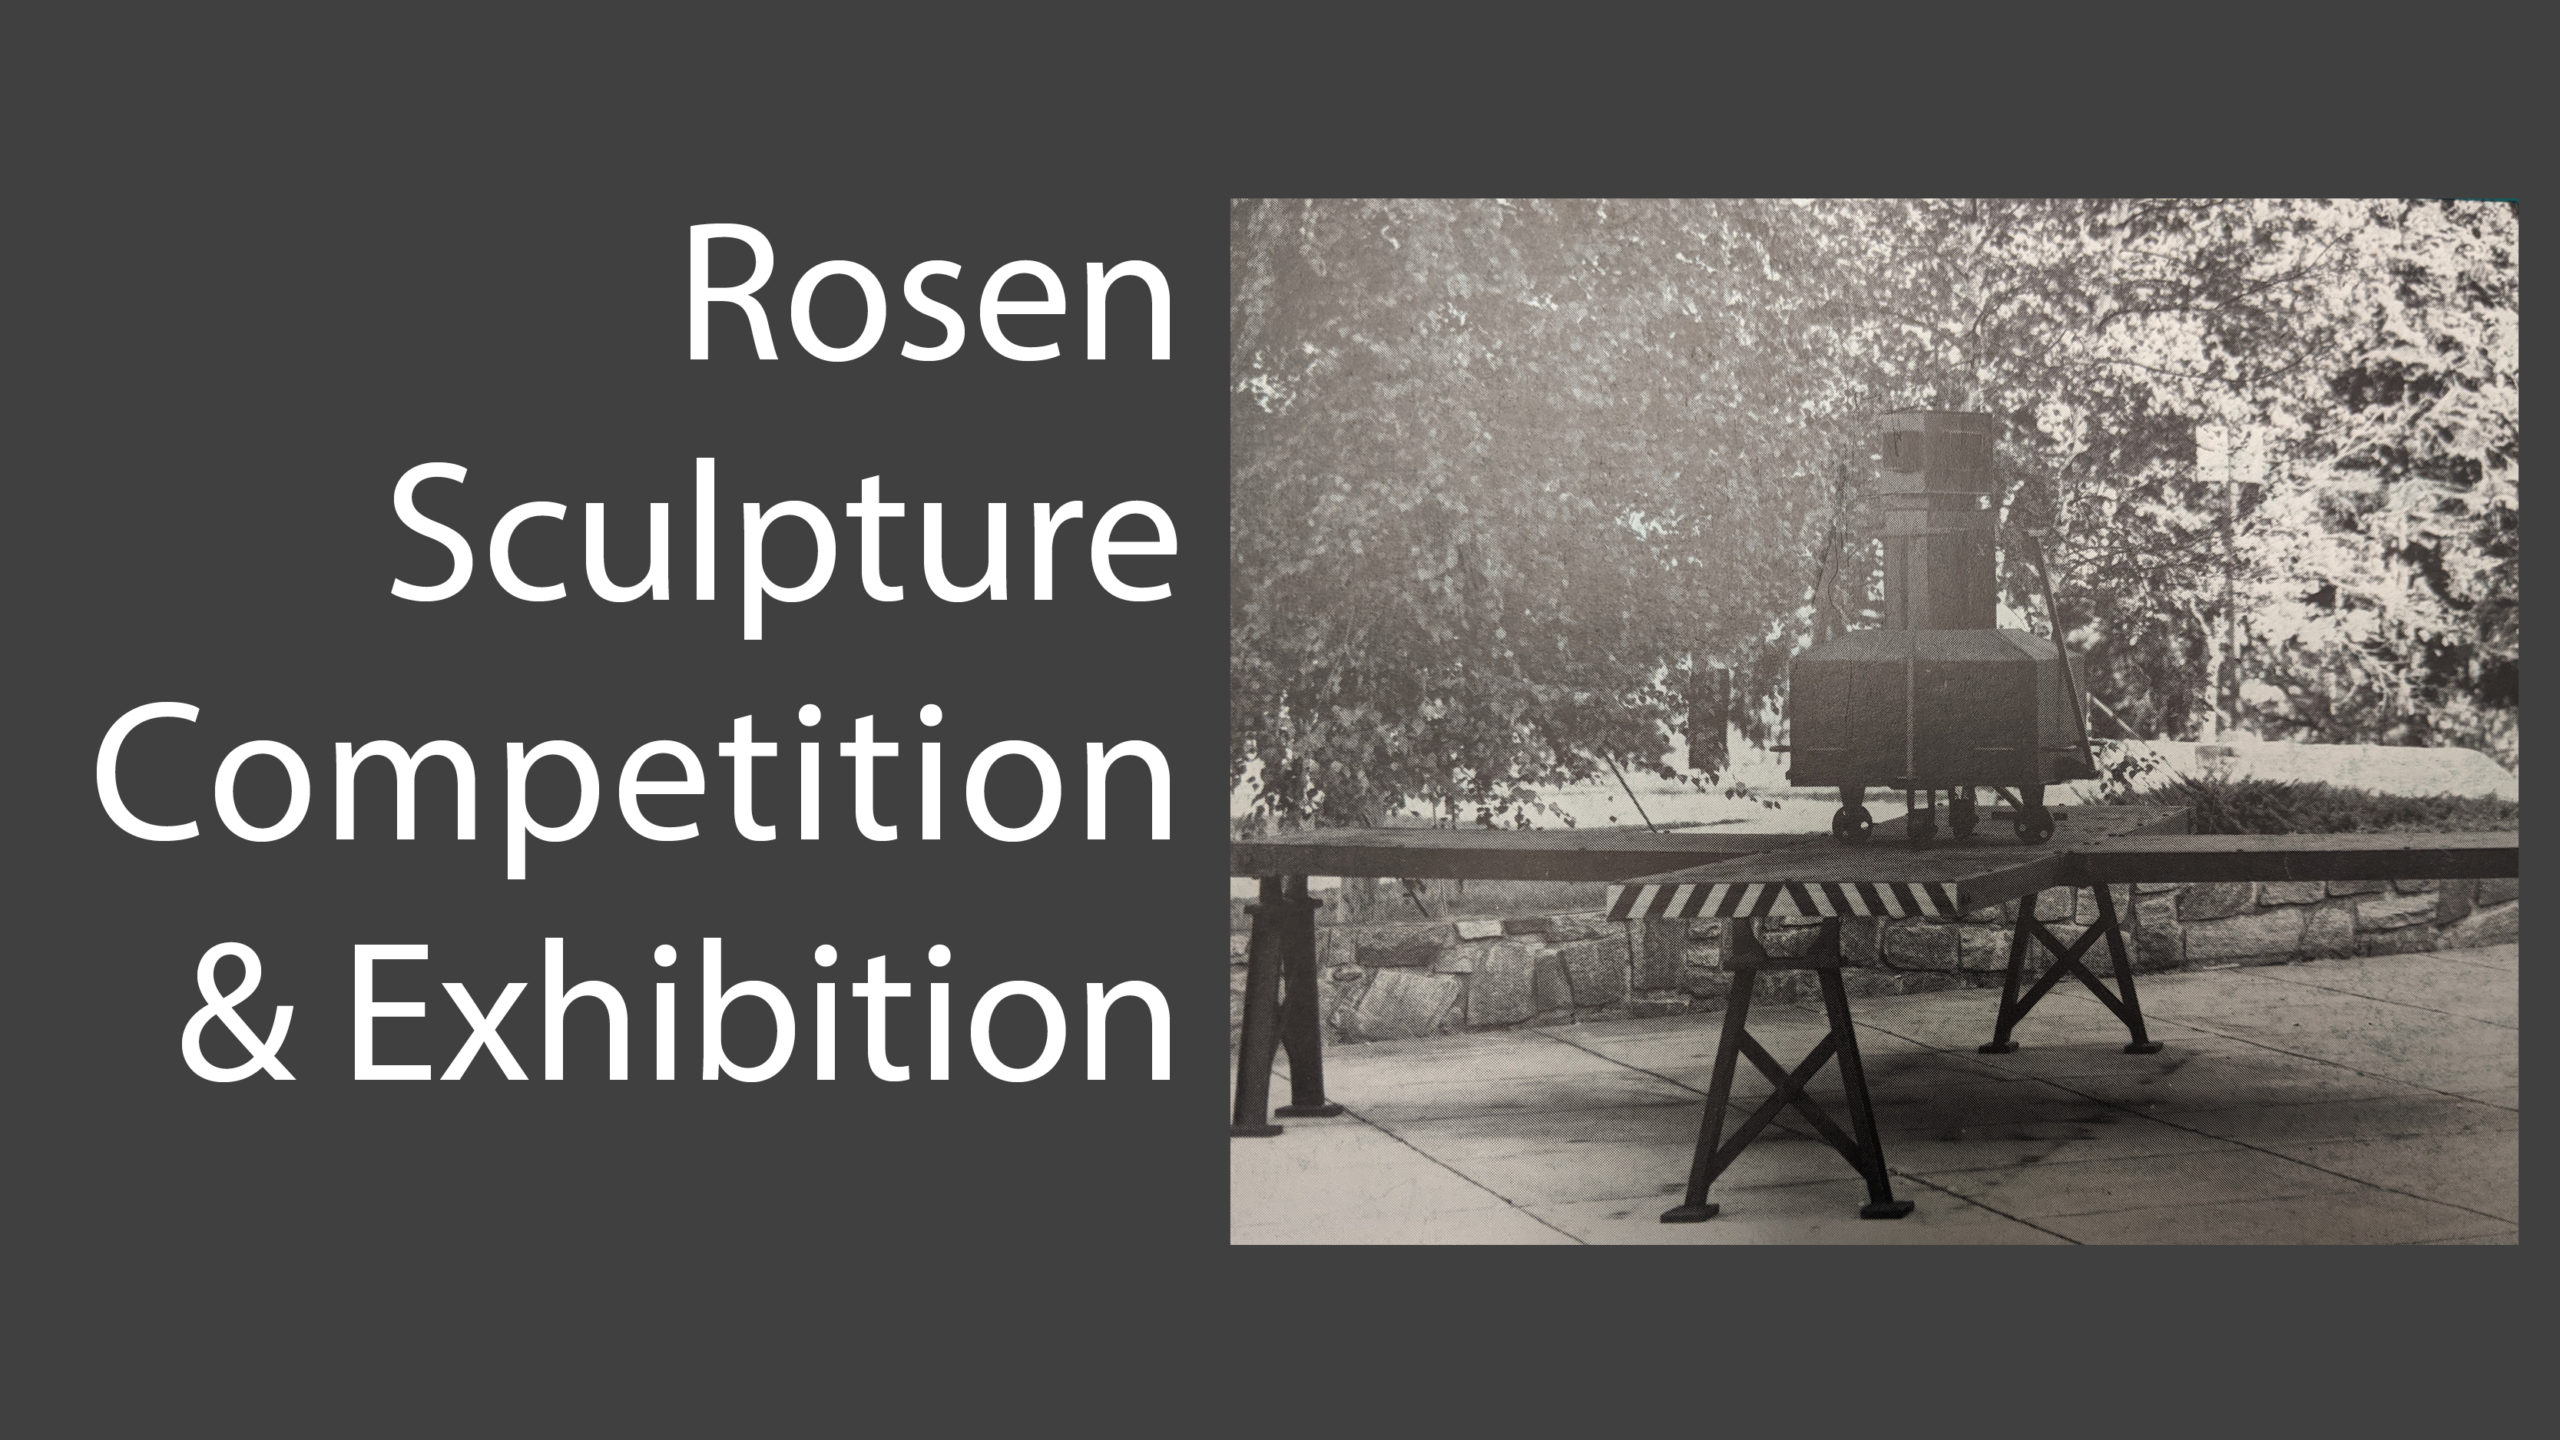 Jim Buonaccorsi, A Question of Direction. 1990 / 4th Rosen Sculpture Competition Winner.